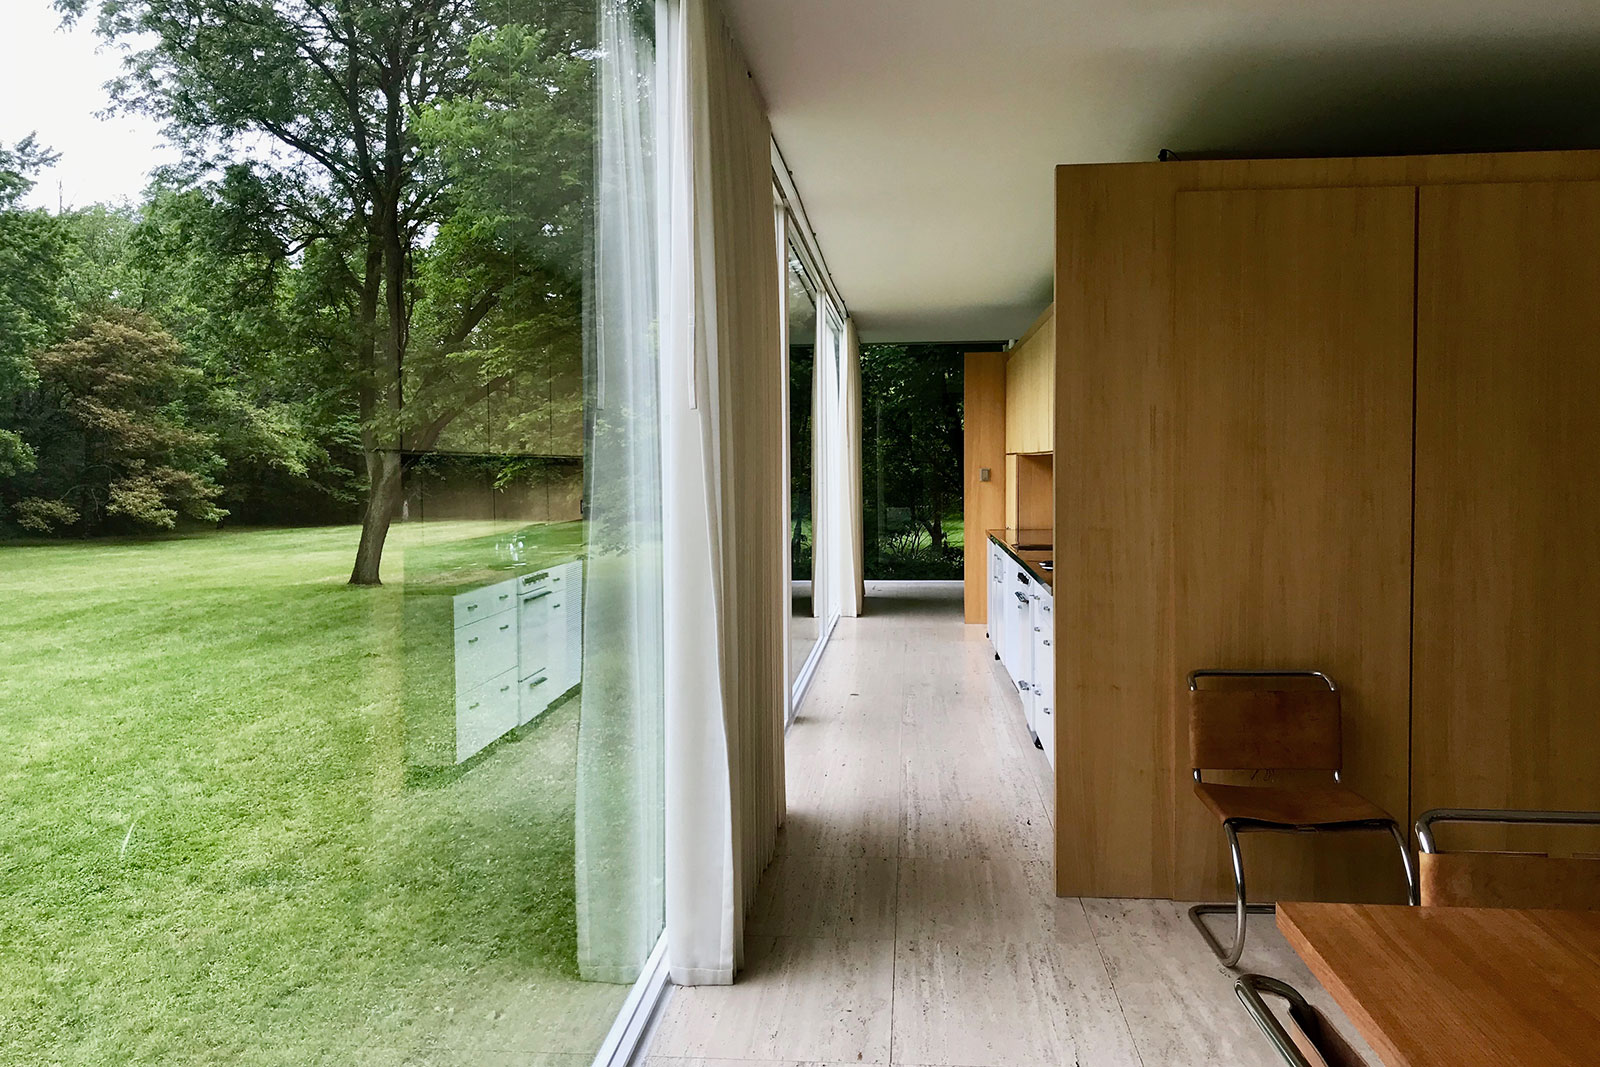 Corridor - The Farnsworth House / Mies van der Rohe